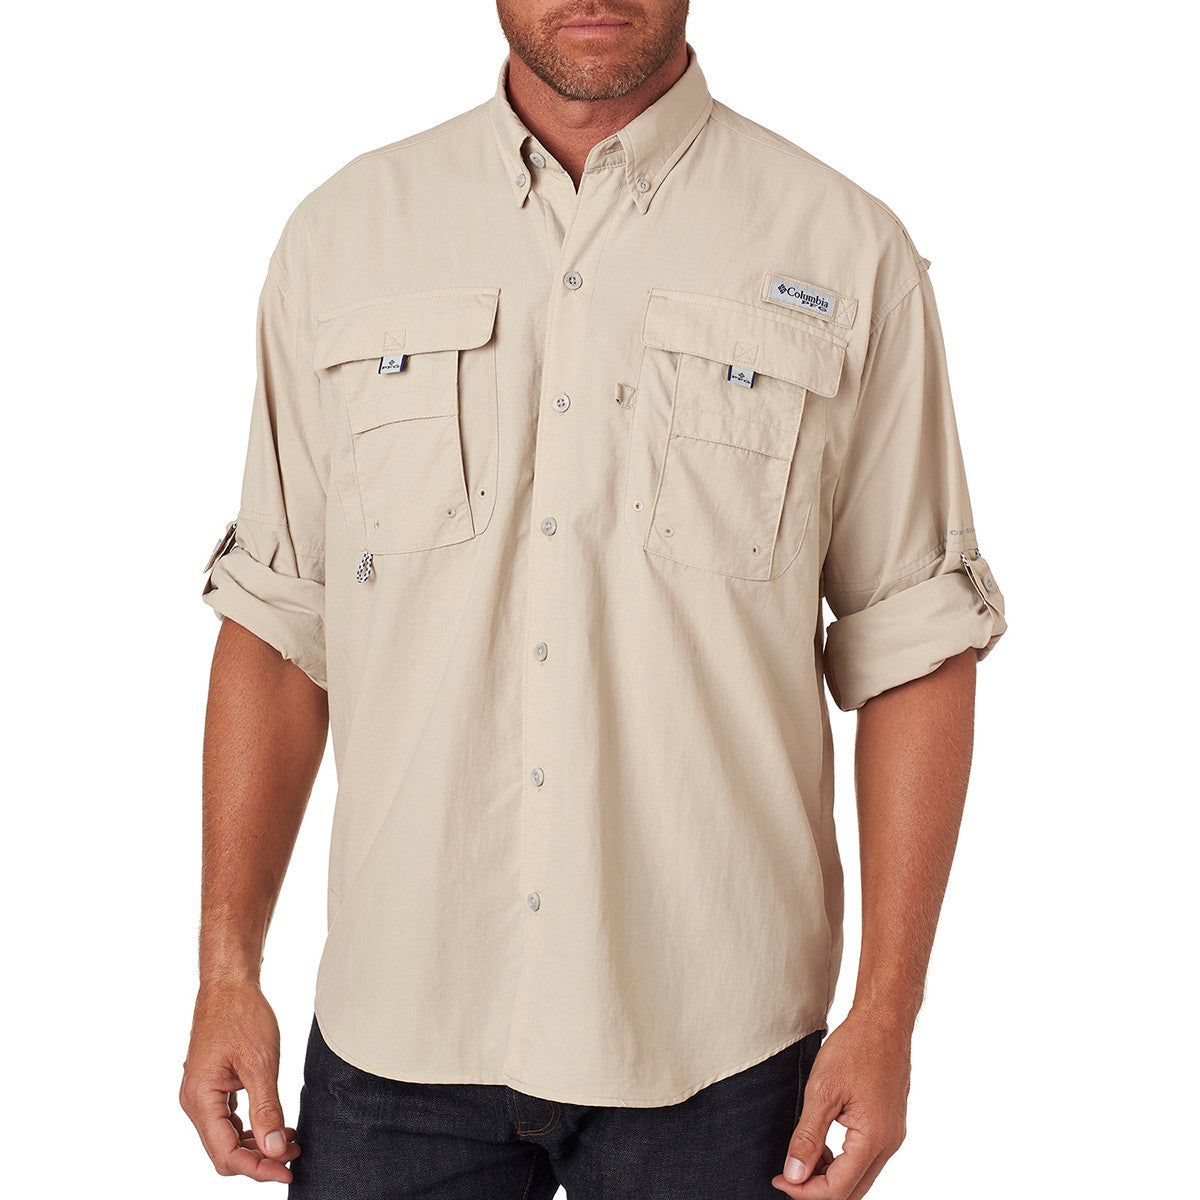 Columbia Bahama II Long Sleeve Shirt, Fossil, X-Large